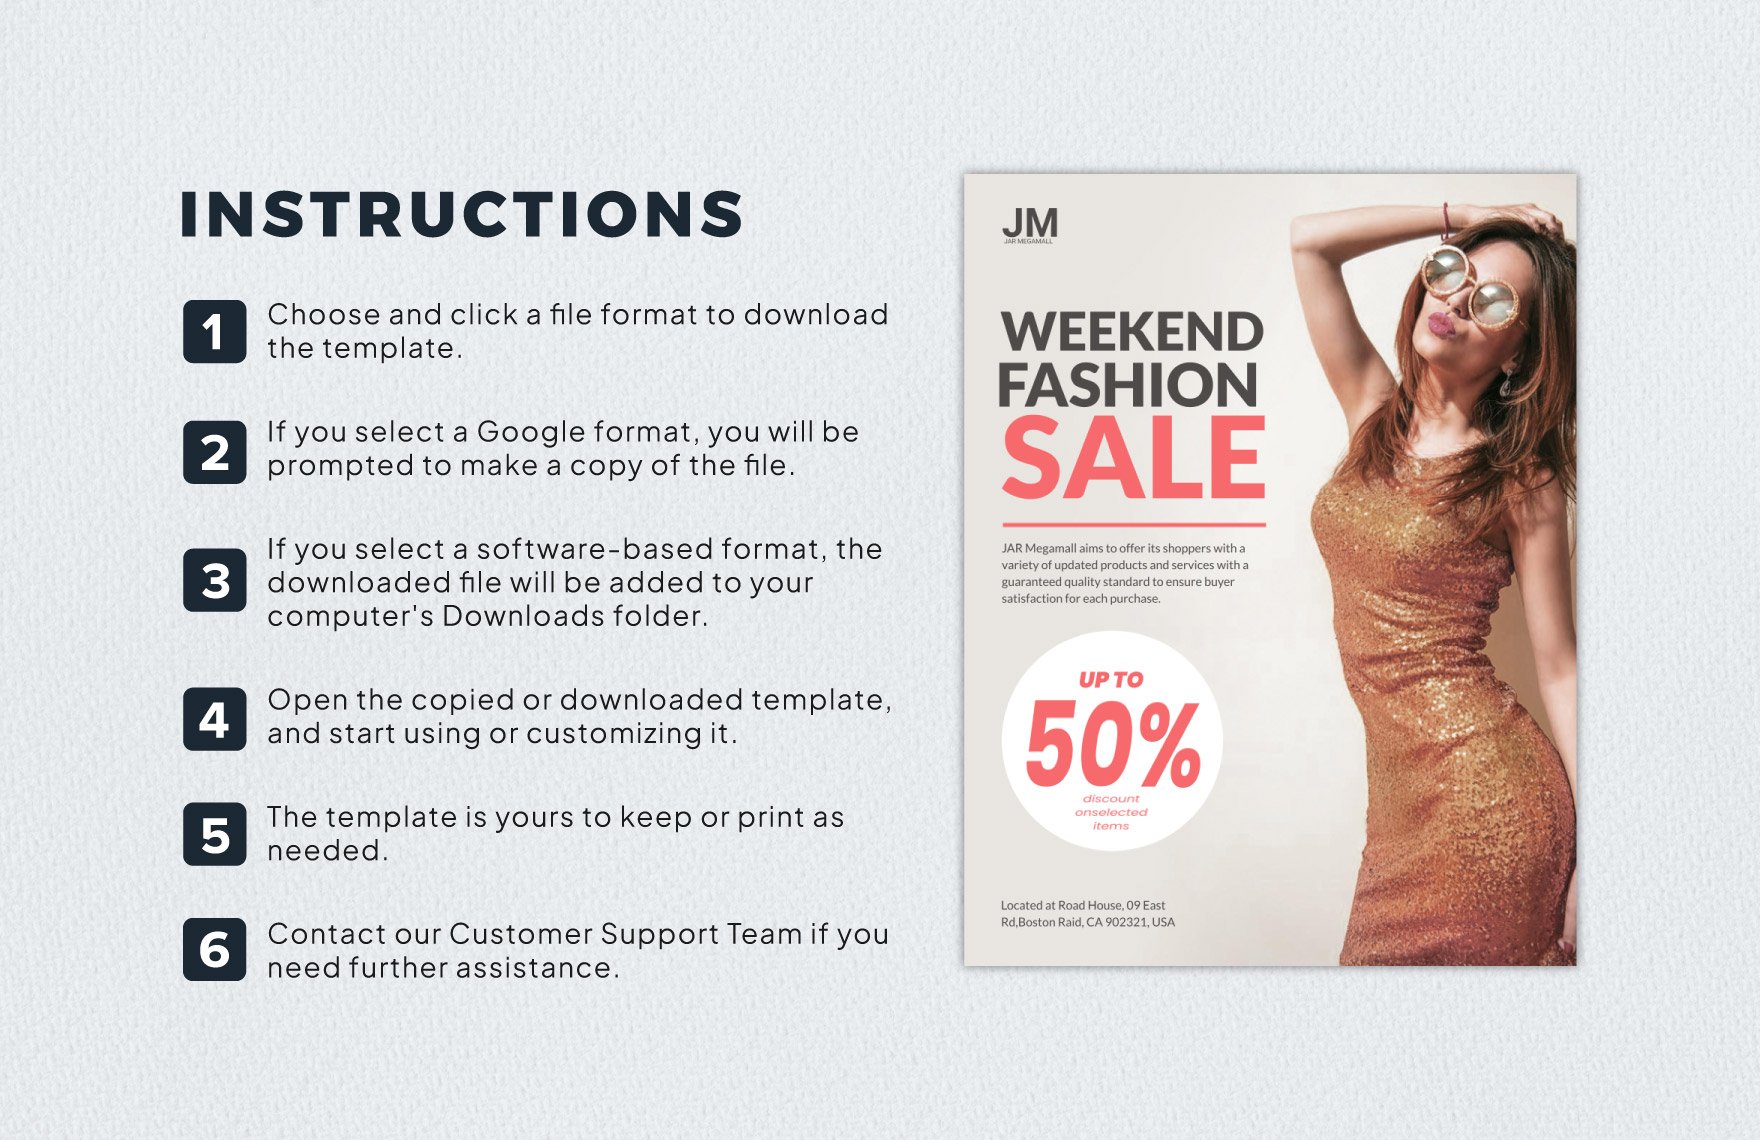 Fashion Sale Flyer Template